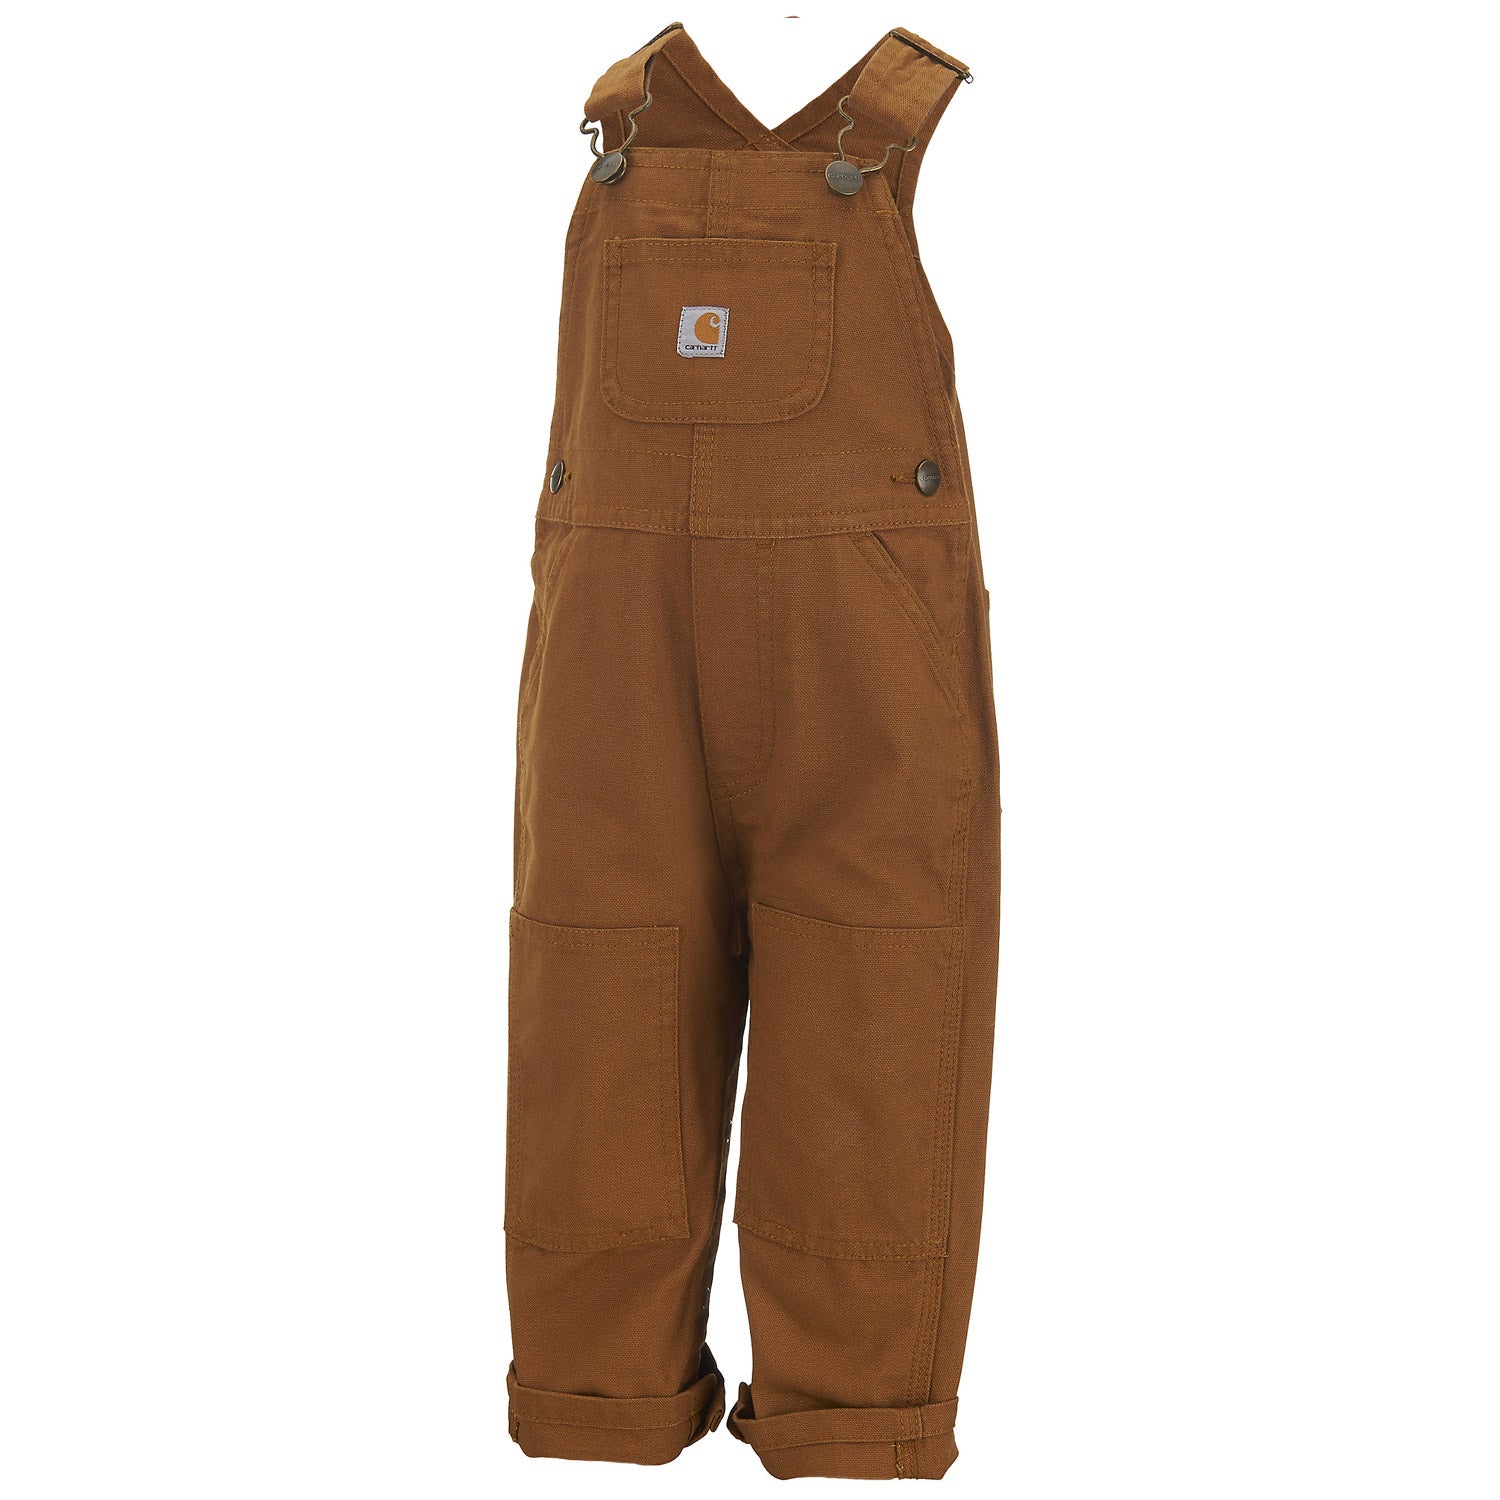 Carhartt (I/K) Duck Canvas Bib Overall - Work World - Workwear, Work Boots, Safety Gear